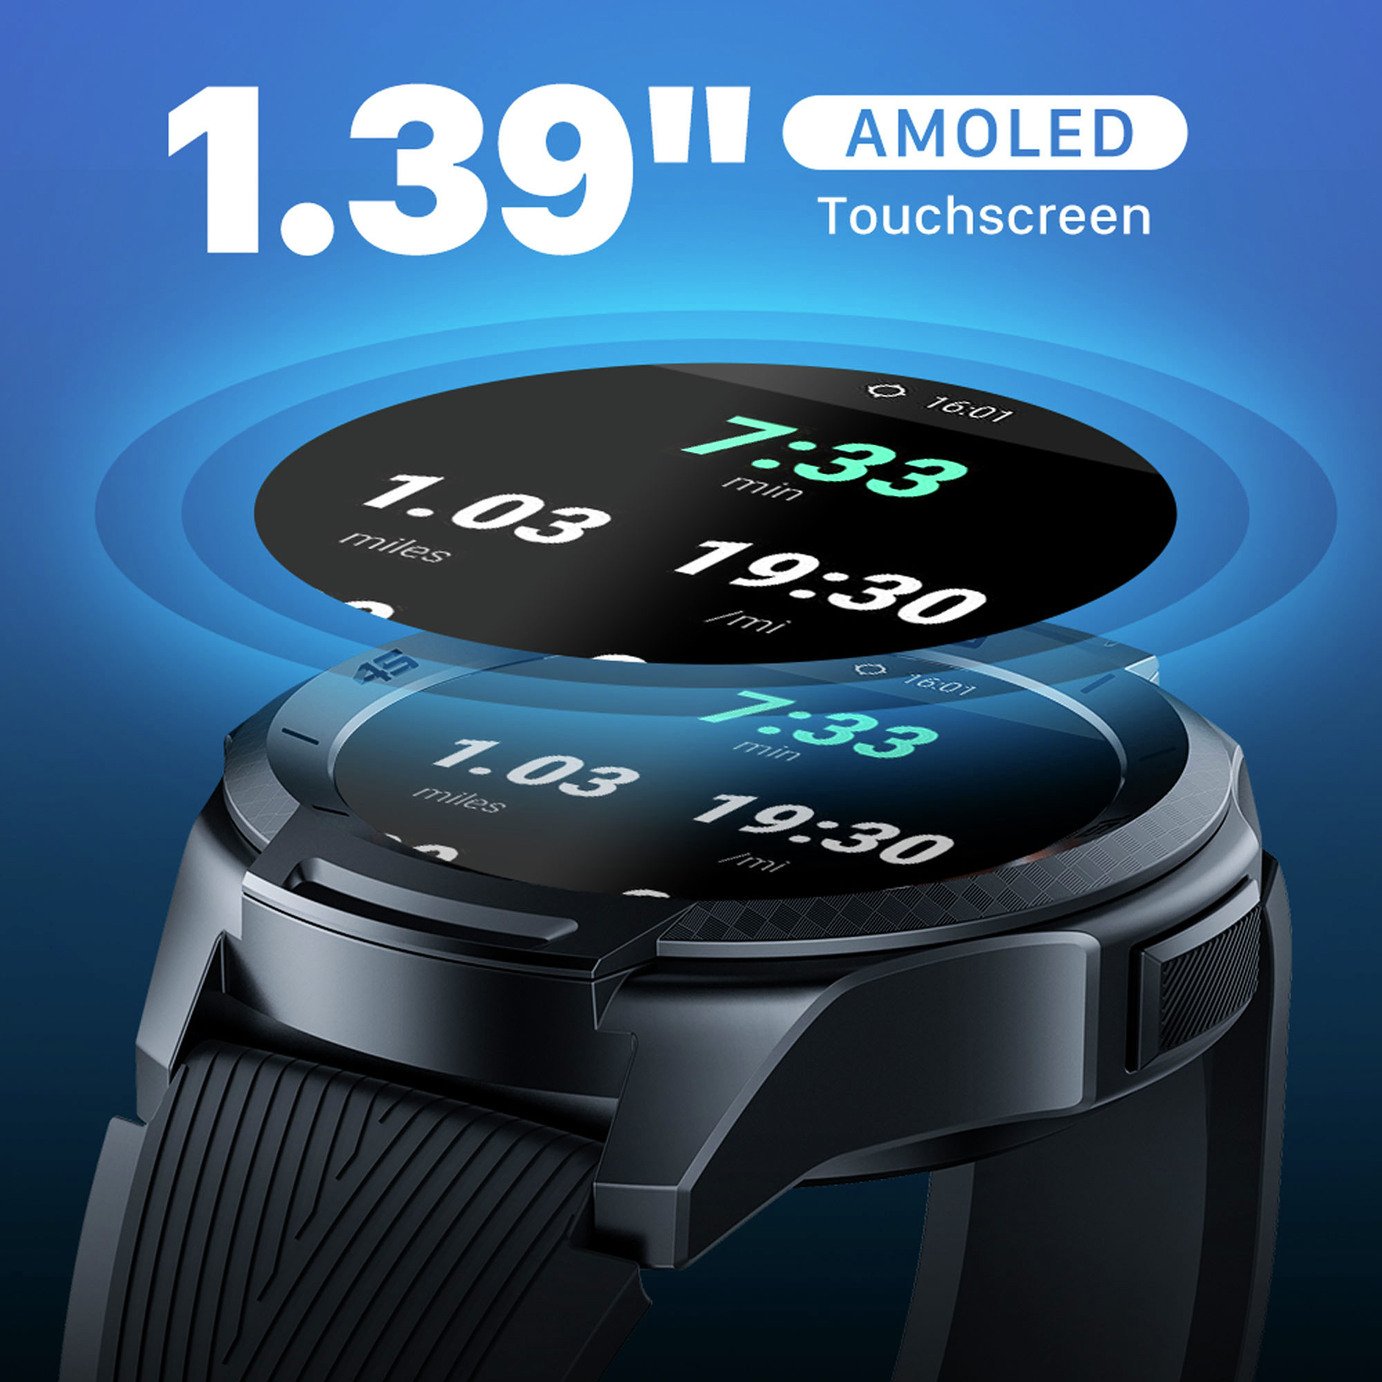 TicWatch S2 Smart Watch Review